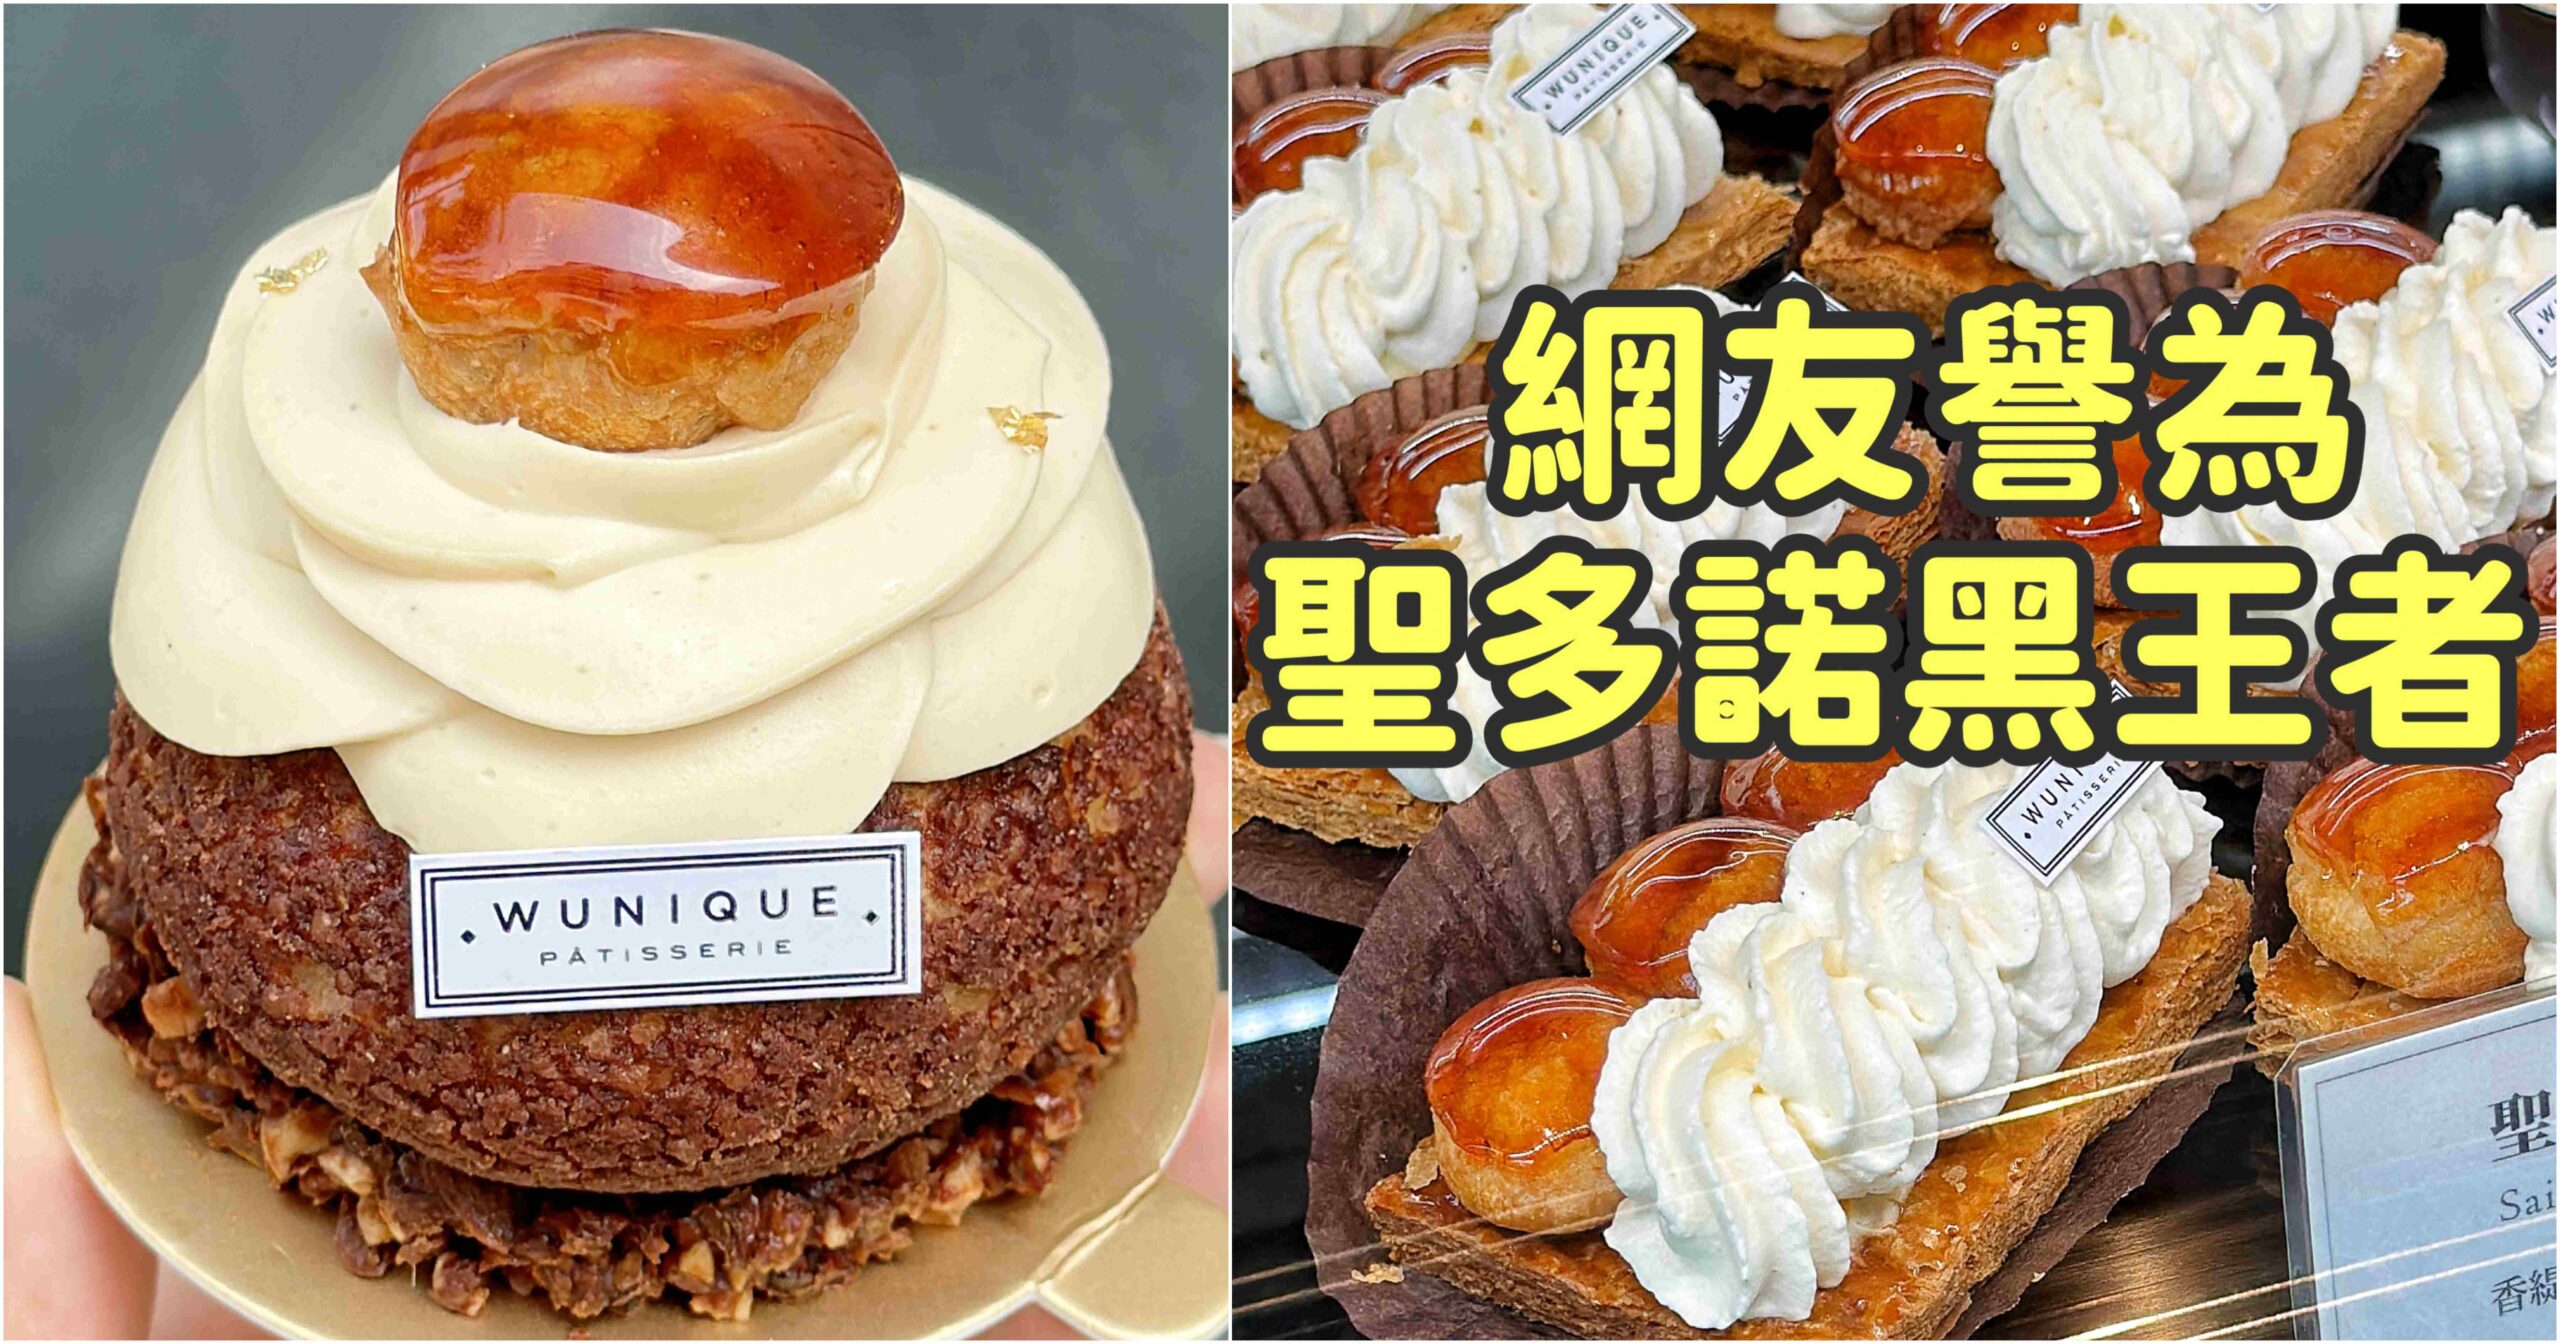 GUF TOKYO-時下最夯！在充滿水的桌子吃甜點！（附菜單） 東京甜點/新宿美食/新宿下午茶/新宿甜點 @大食女 in Wonderland